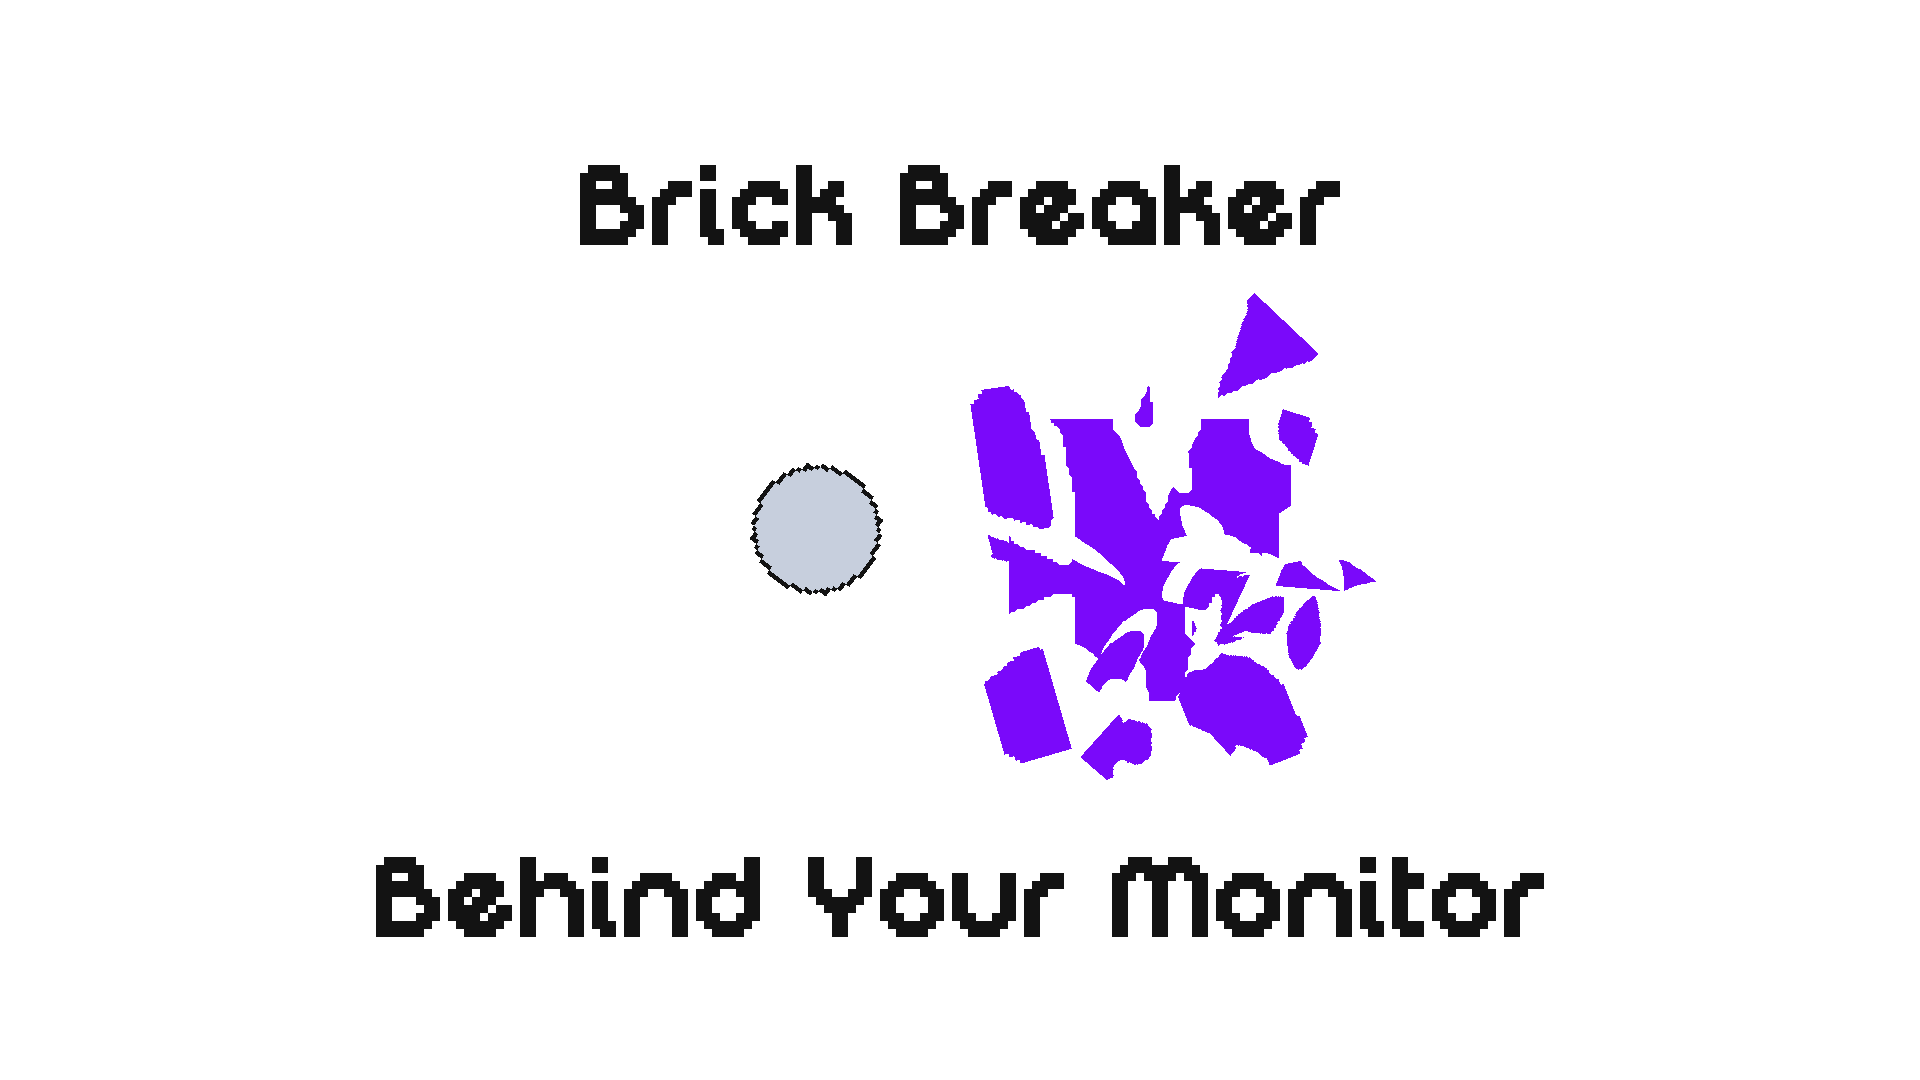 Brick Breaker Behind Your Monitor